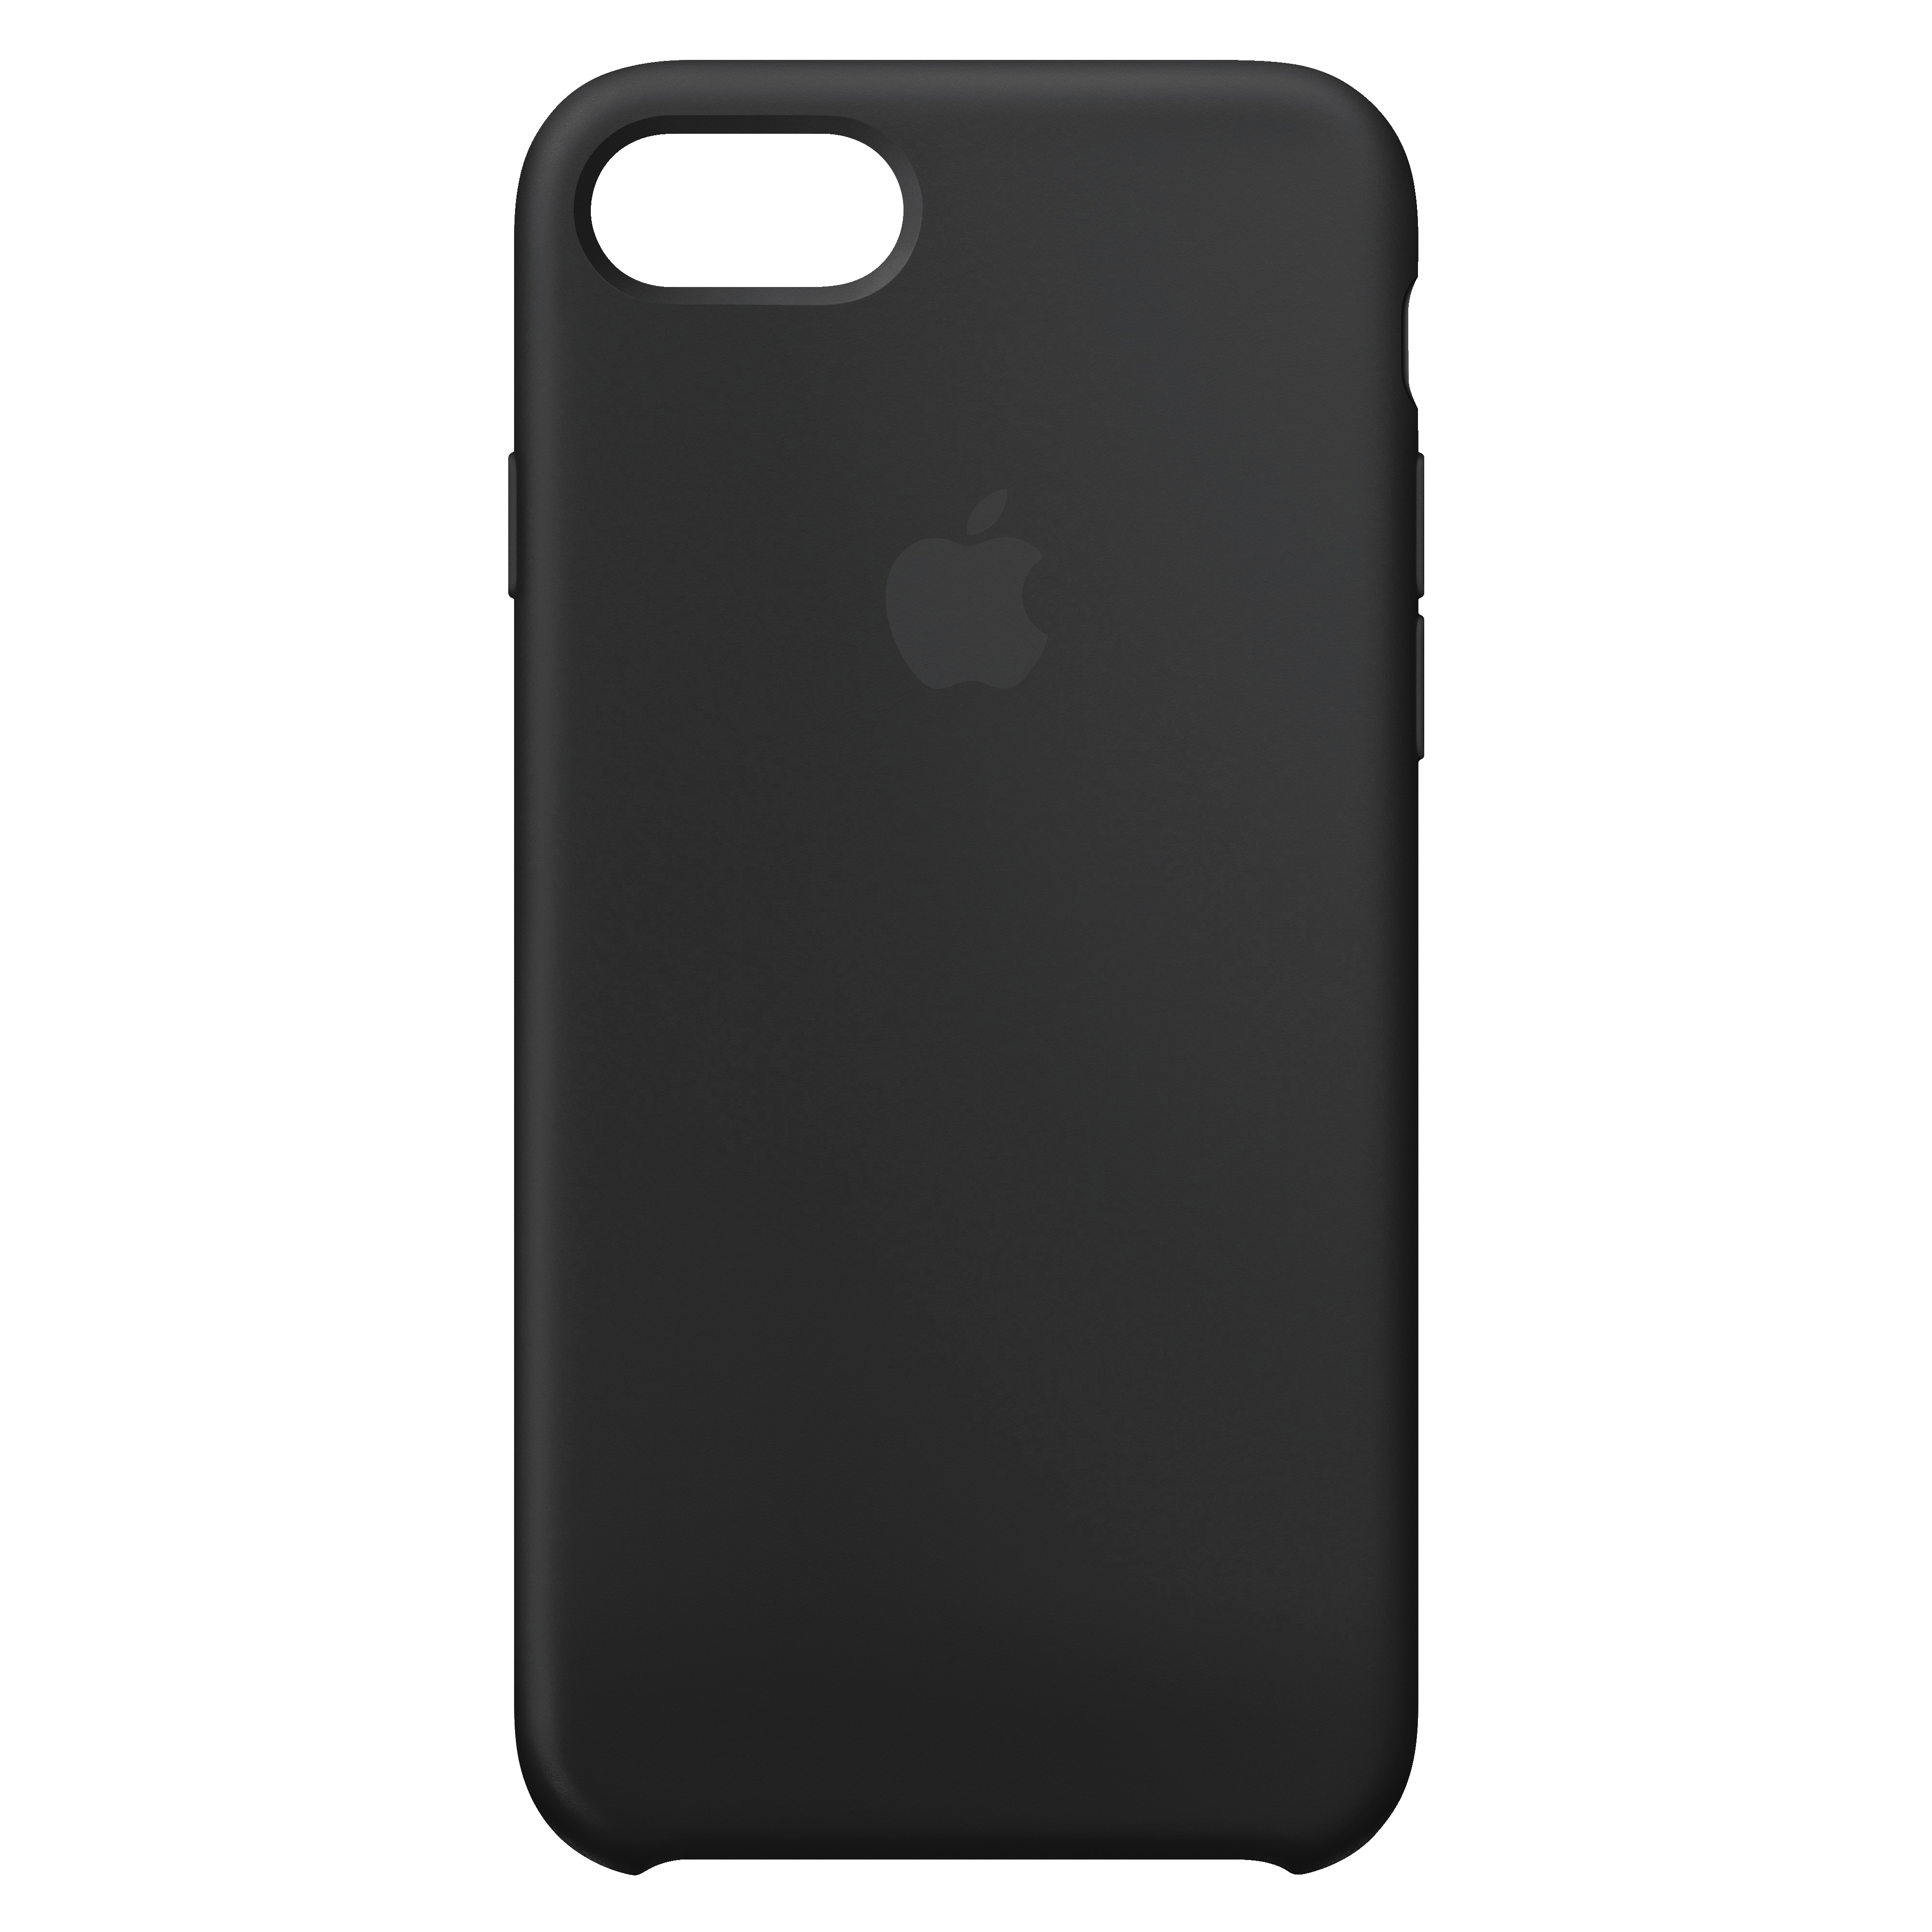 Apple iPhone 8/SE silikoneetui - sort - Cover & etui - Elgiganten